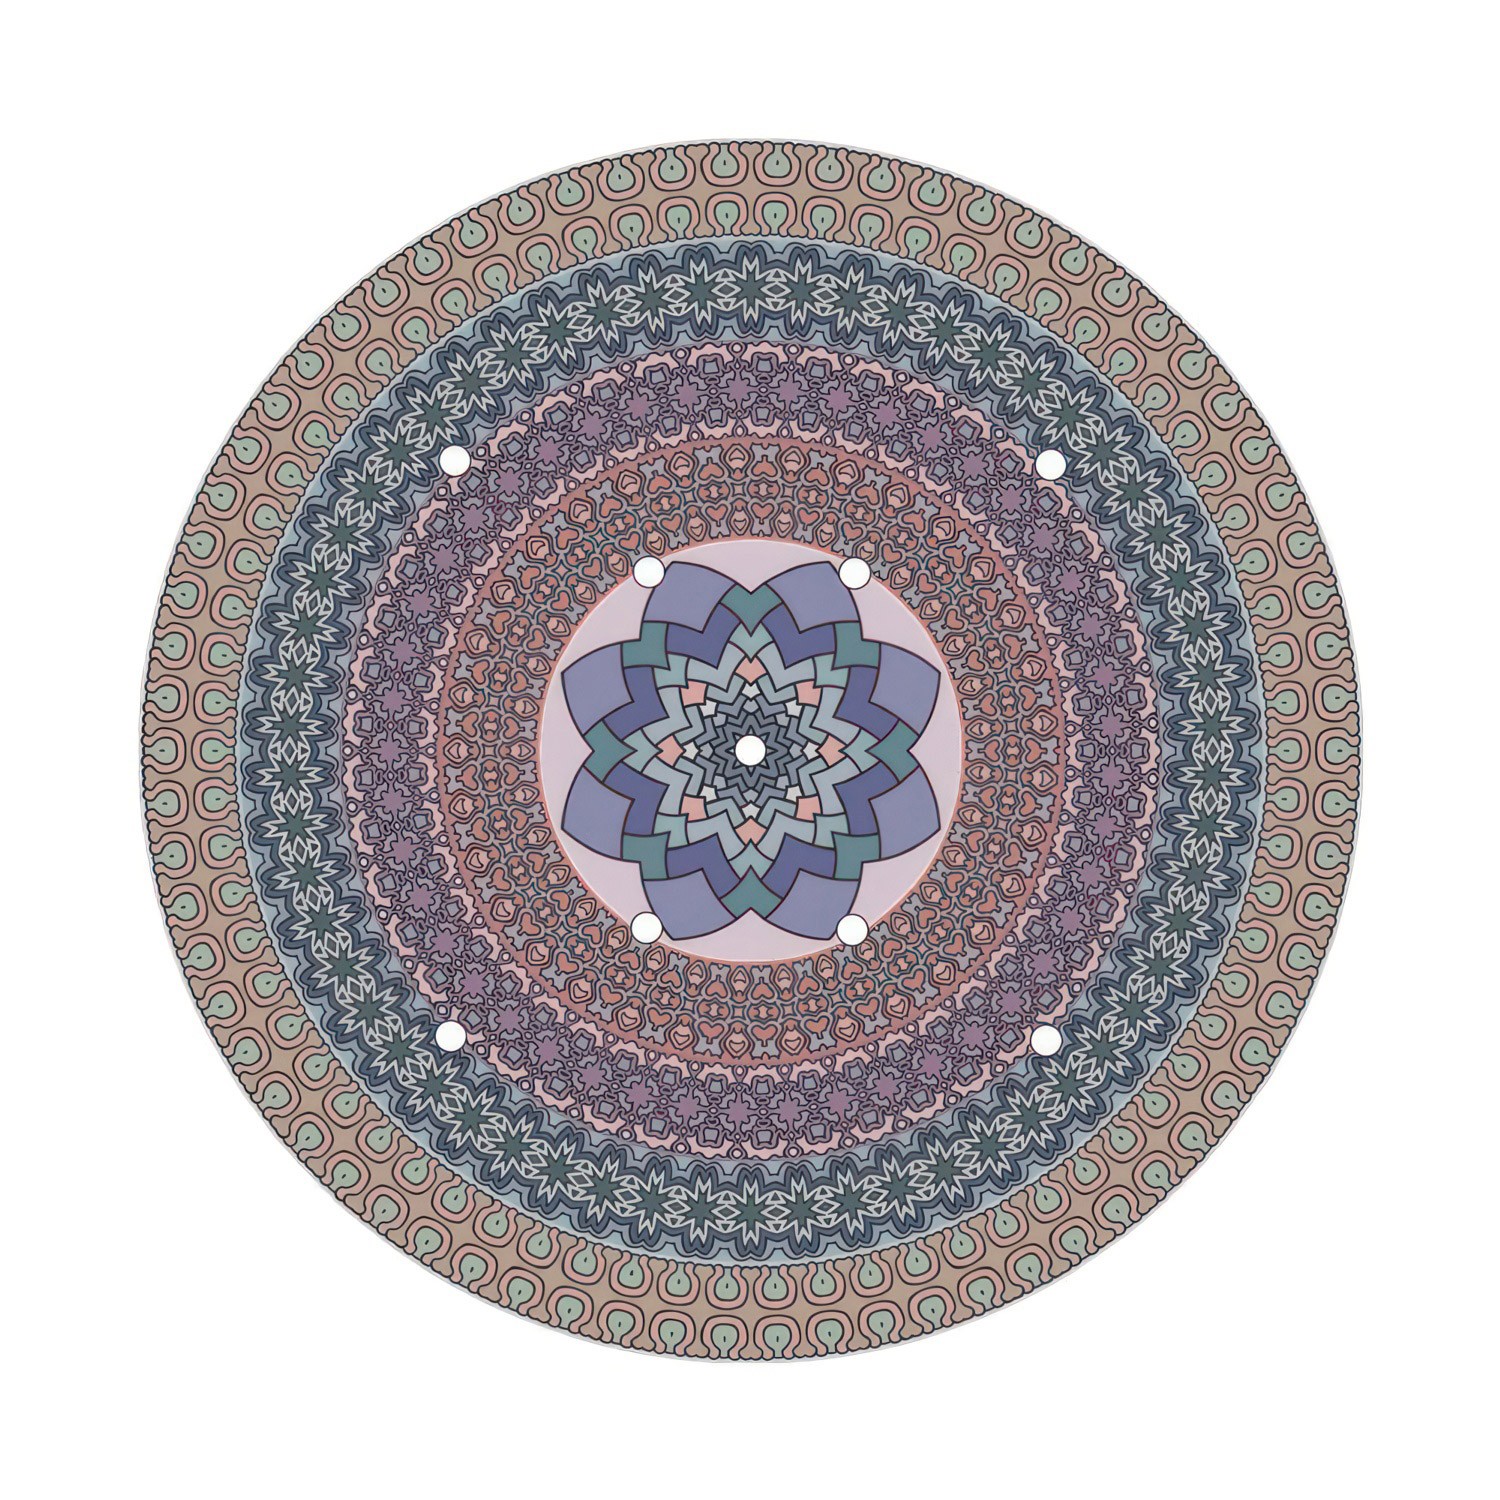 Velika okrugla dekoracija za stropnu rozetu 400 mm - Rose-One sistem s 9 rupa oblika X i 4 bočne rupe - PROMO